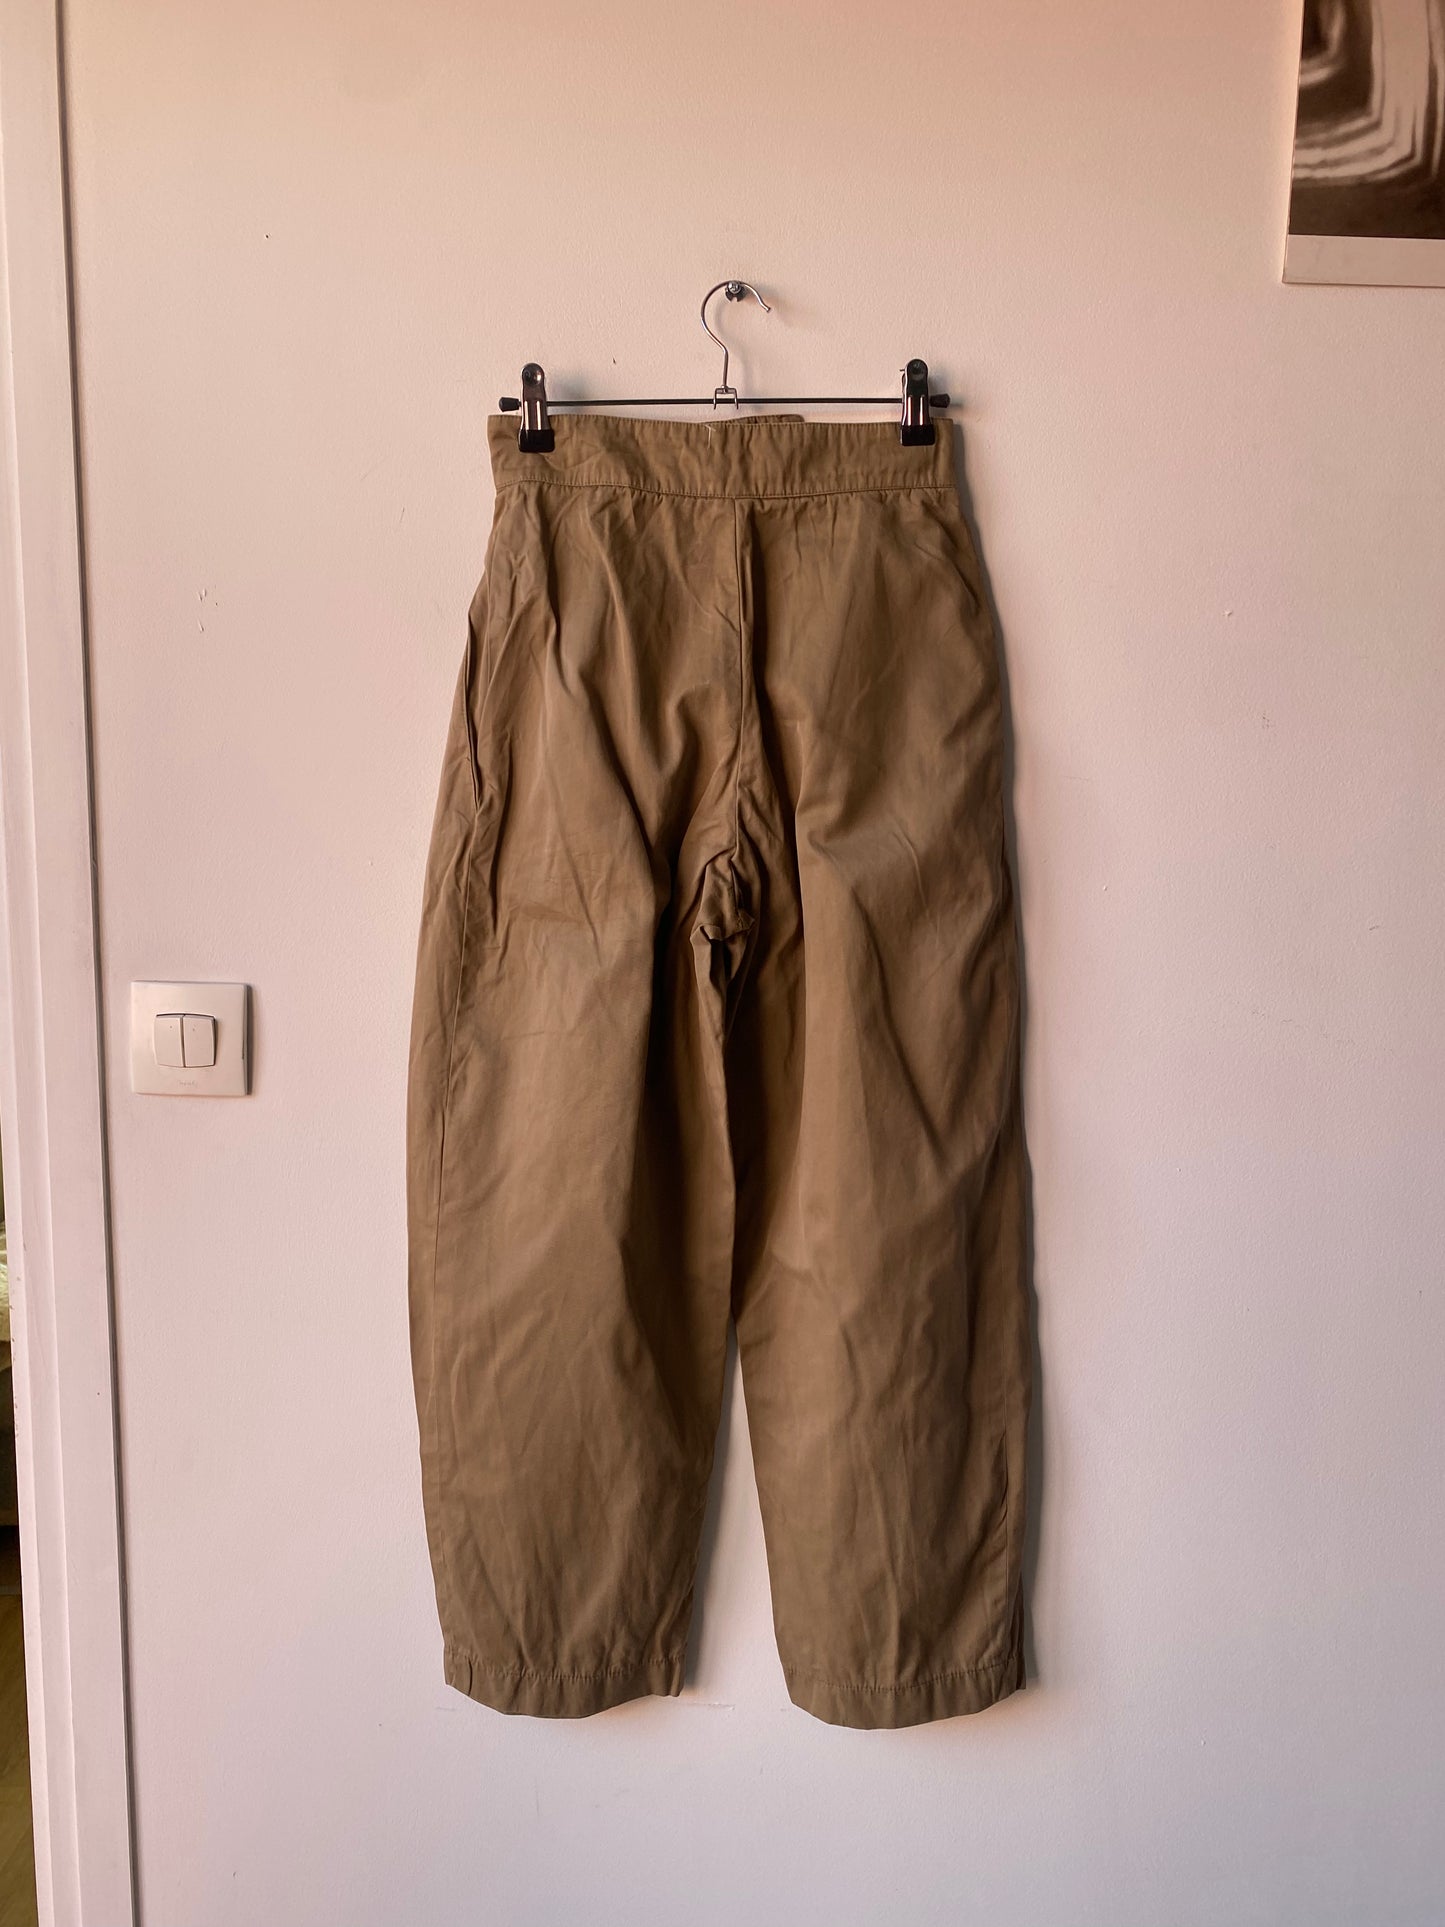 Pantalon marron 80s